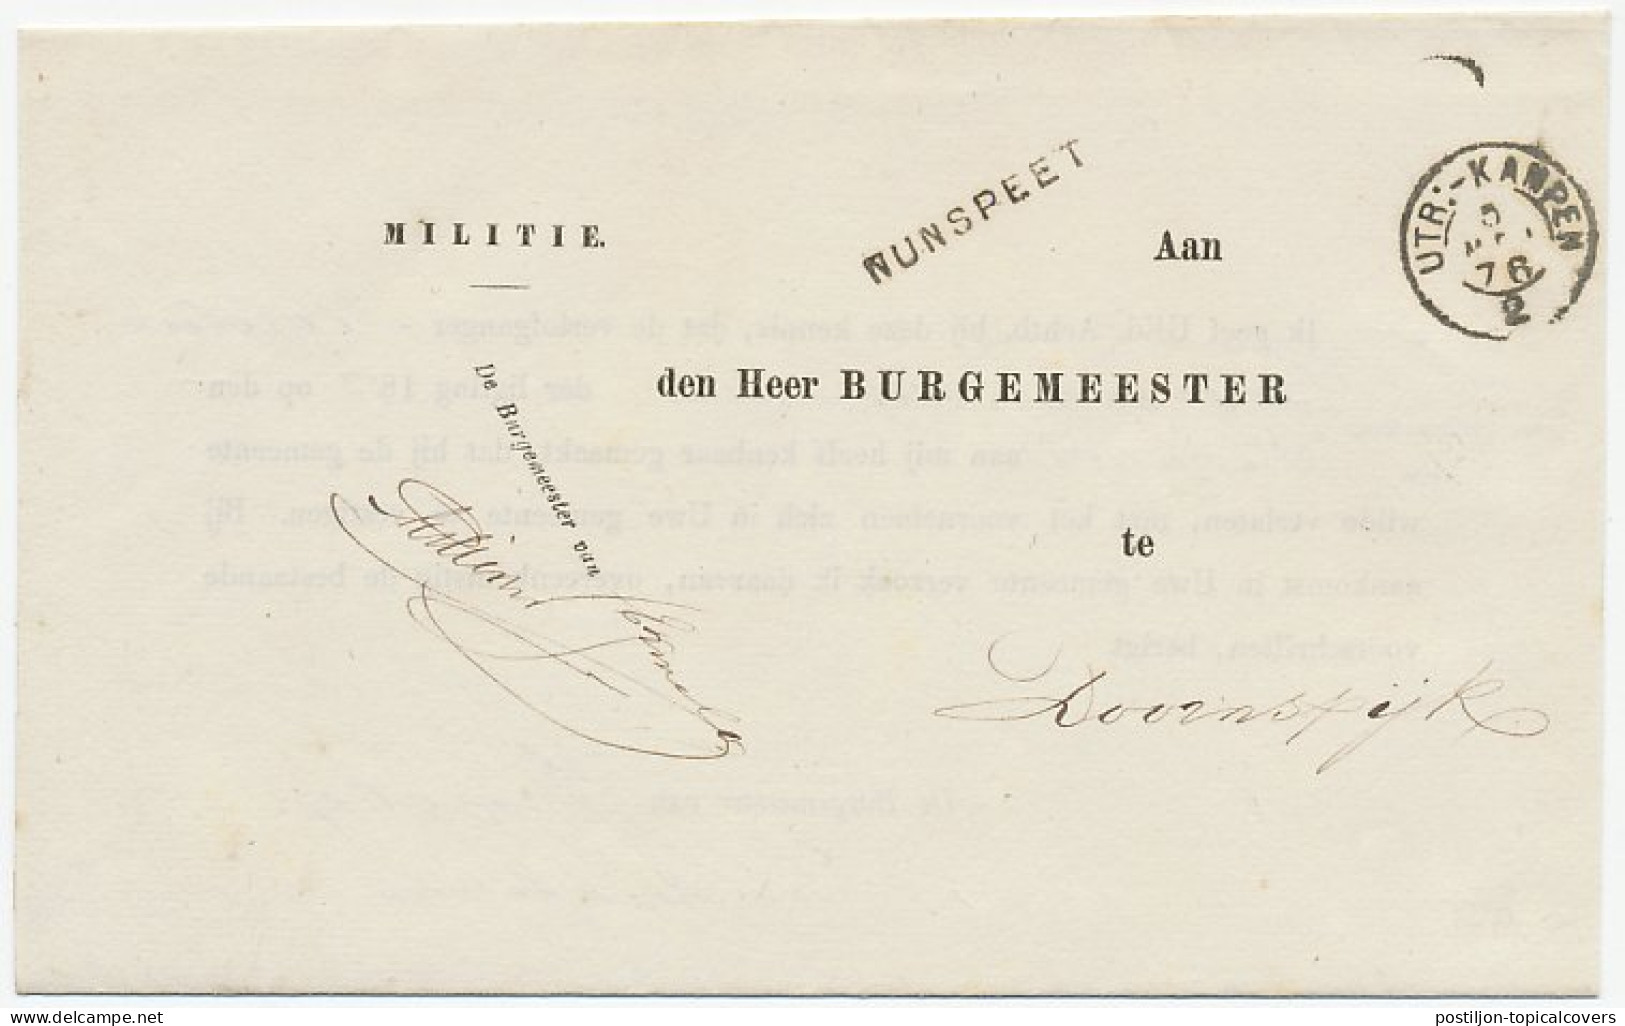 Trein Kleinrondstempel : Utrecht - Kampen 2 1876 - Covers & Documents